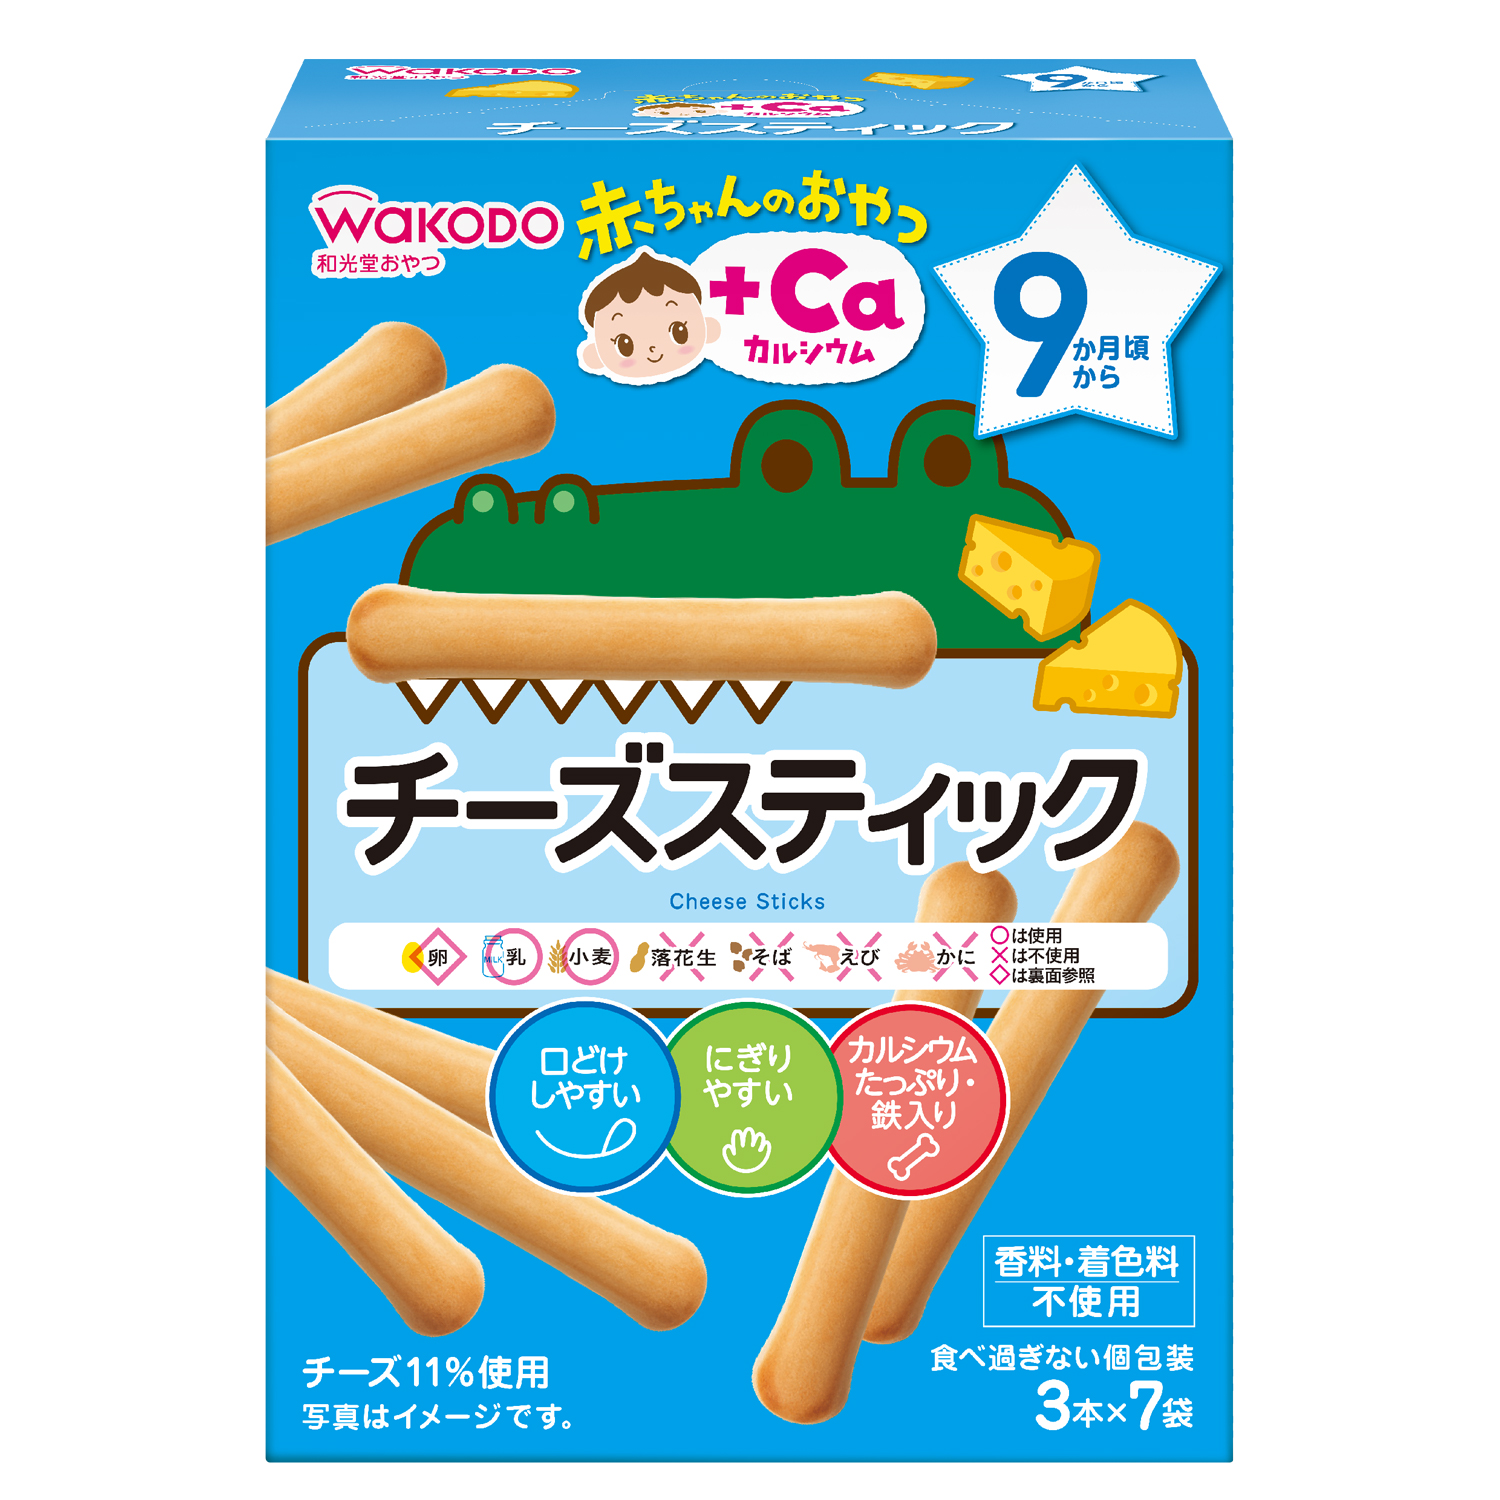 WAKODO Baby Snacks +Ca Cheese Sticks Baby Biscuits (9+ Months) (Bundle of 6)